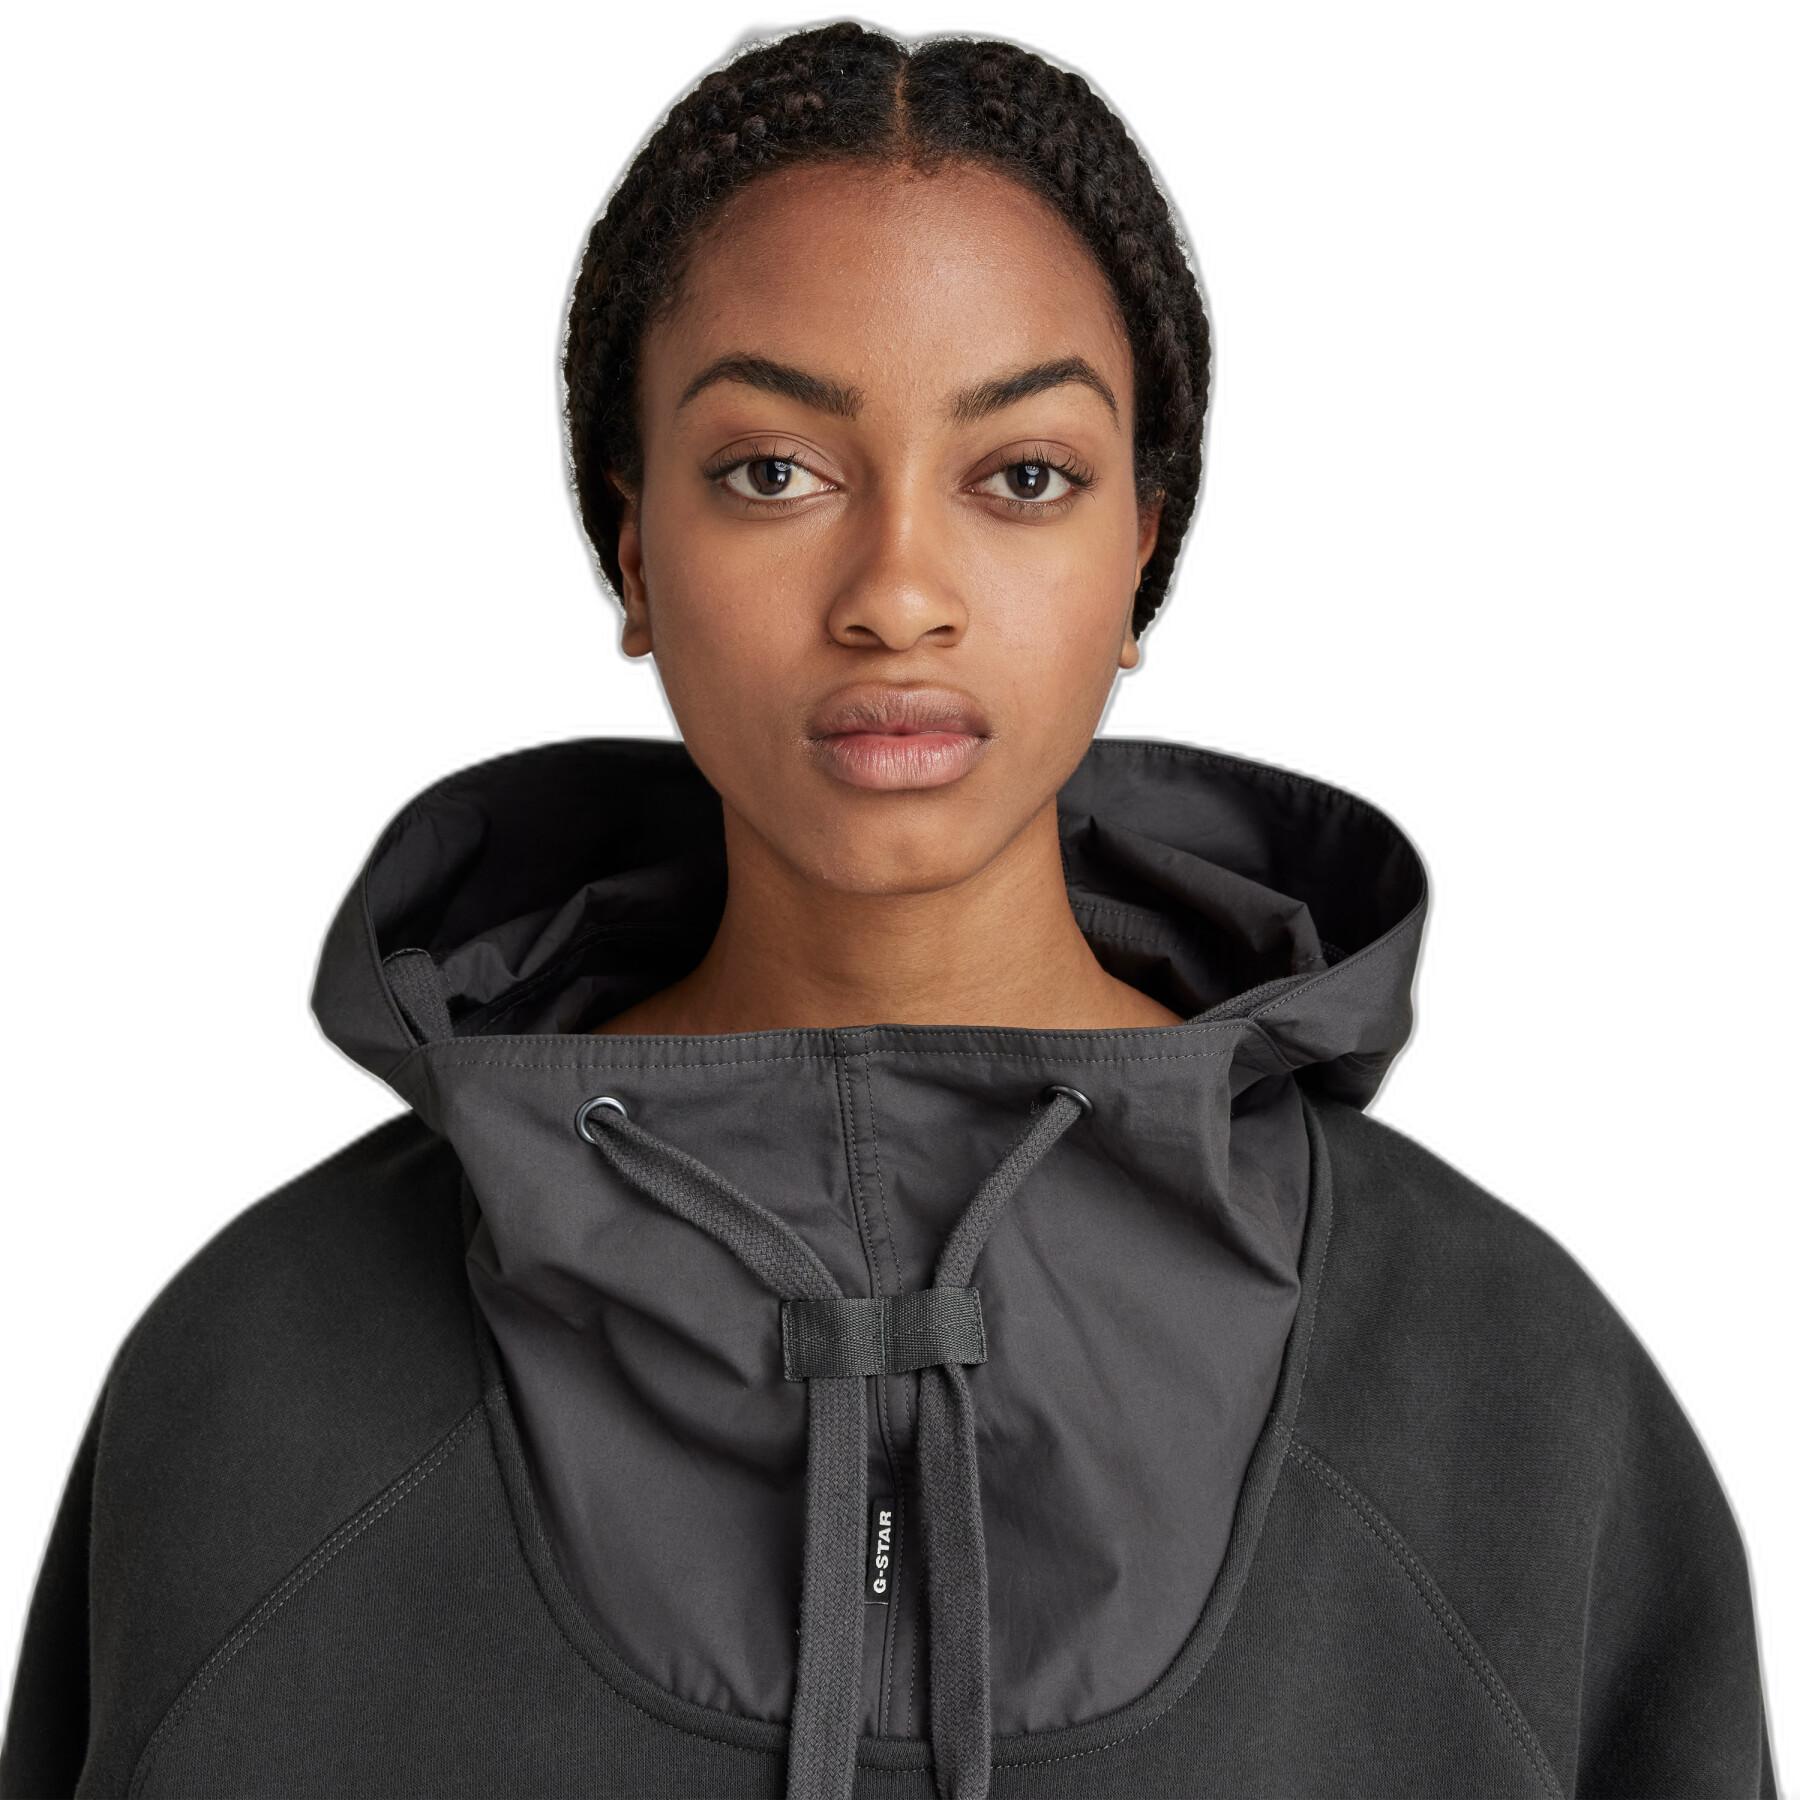 Women's hooded sweatshirt G-Star Mix Graphic Loose